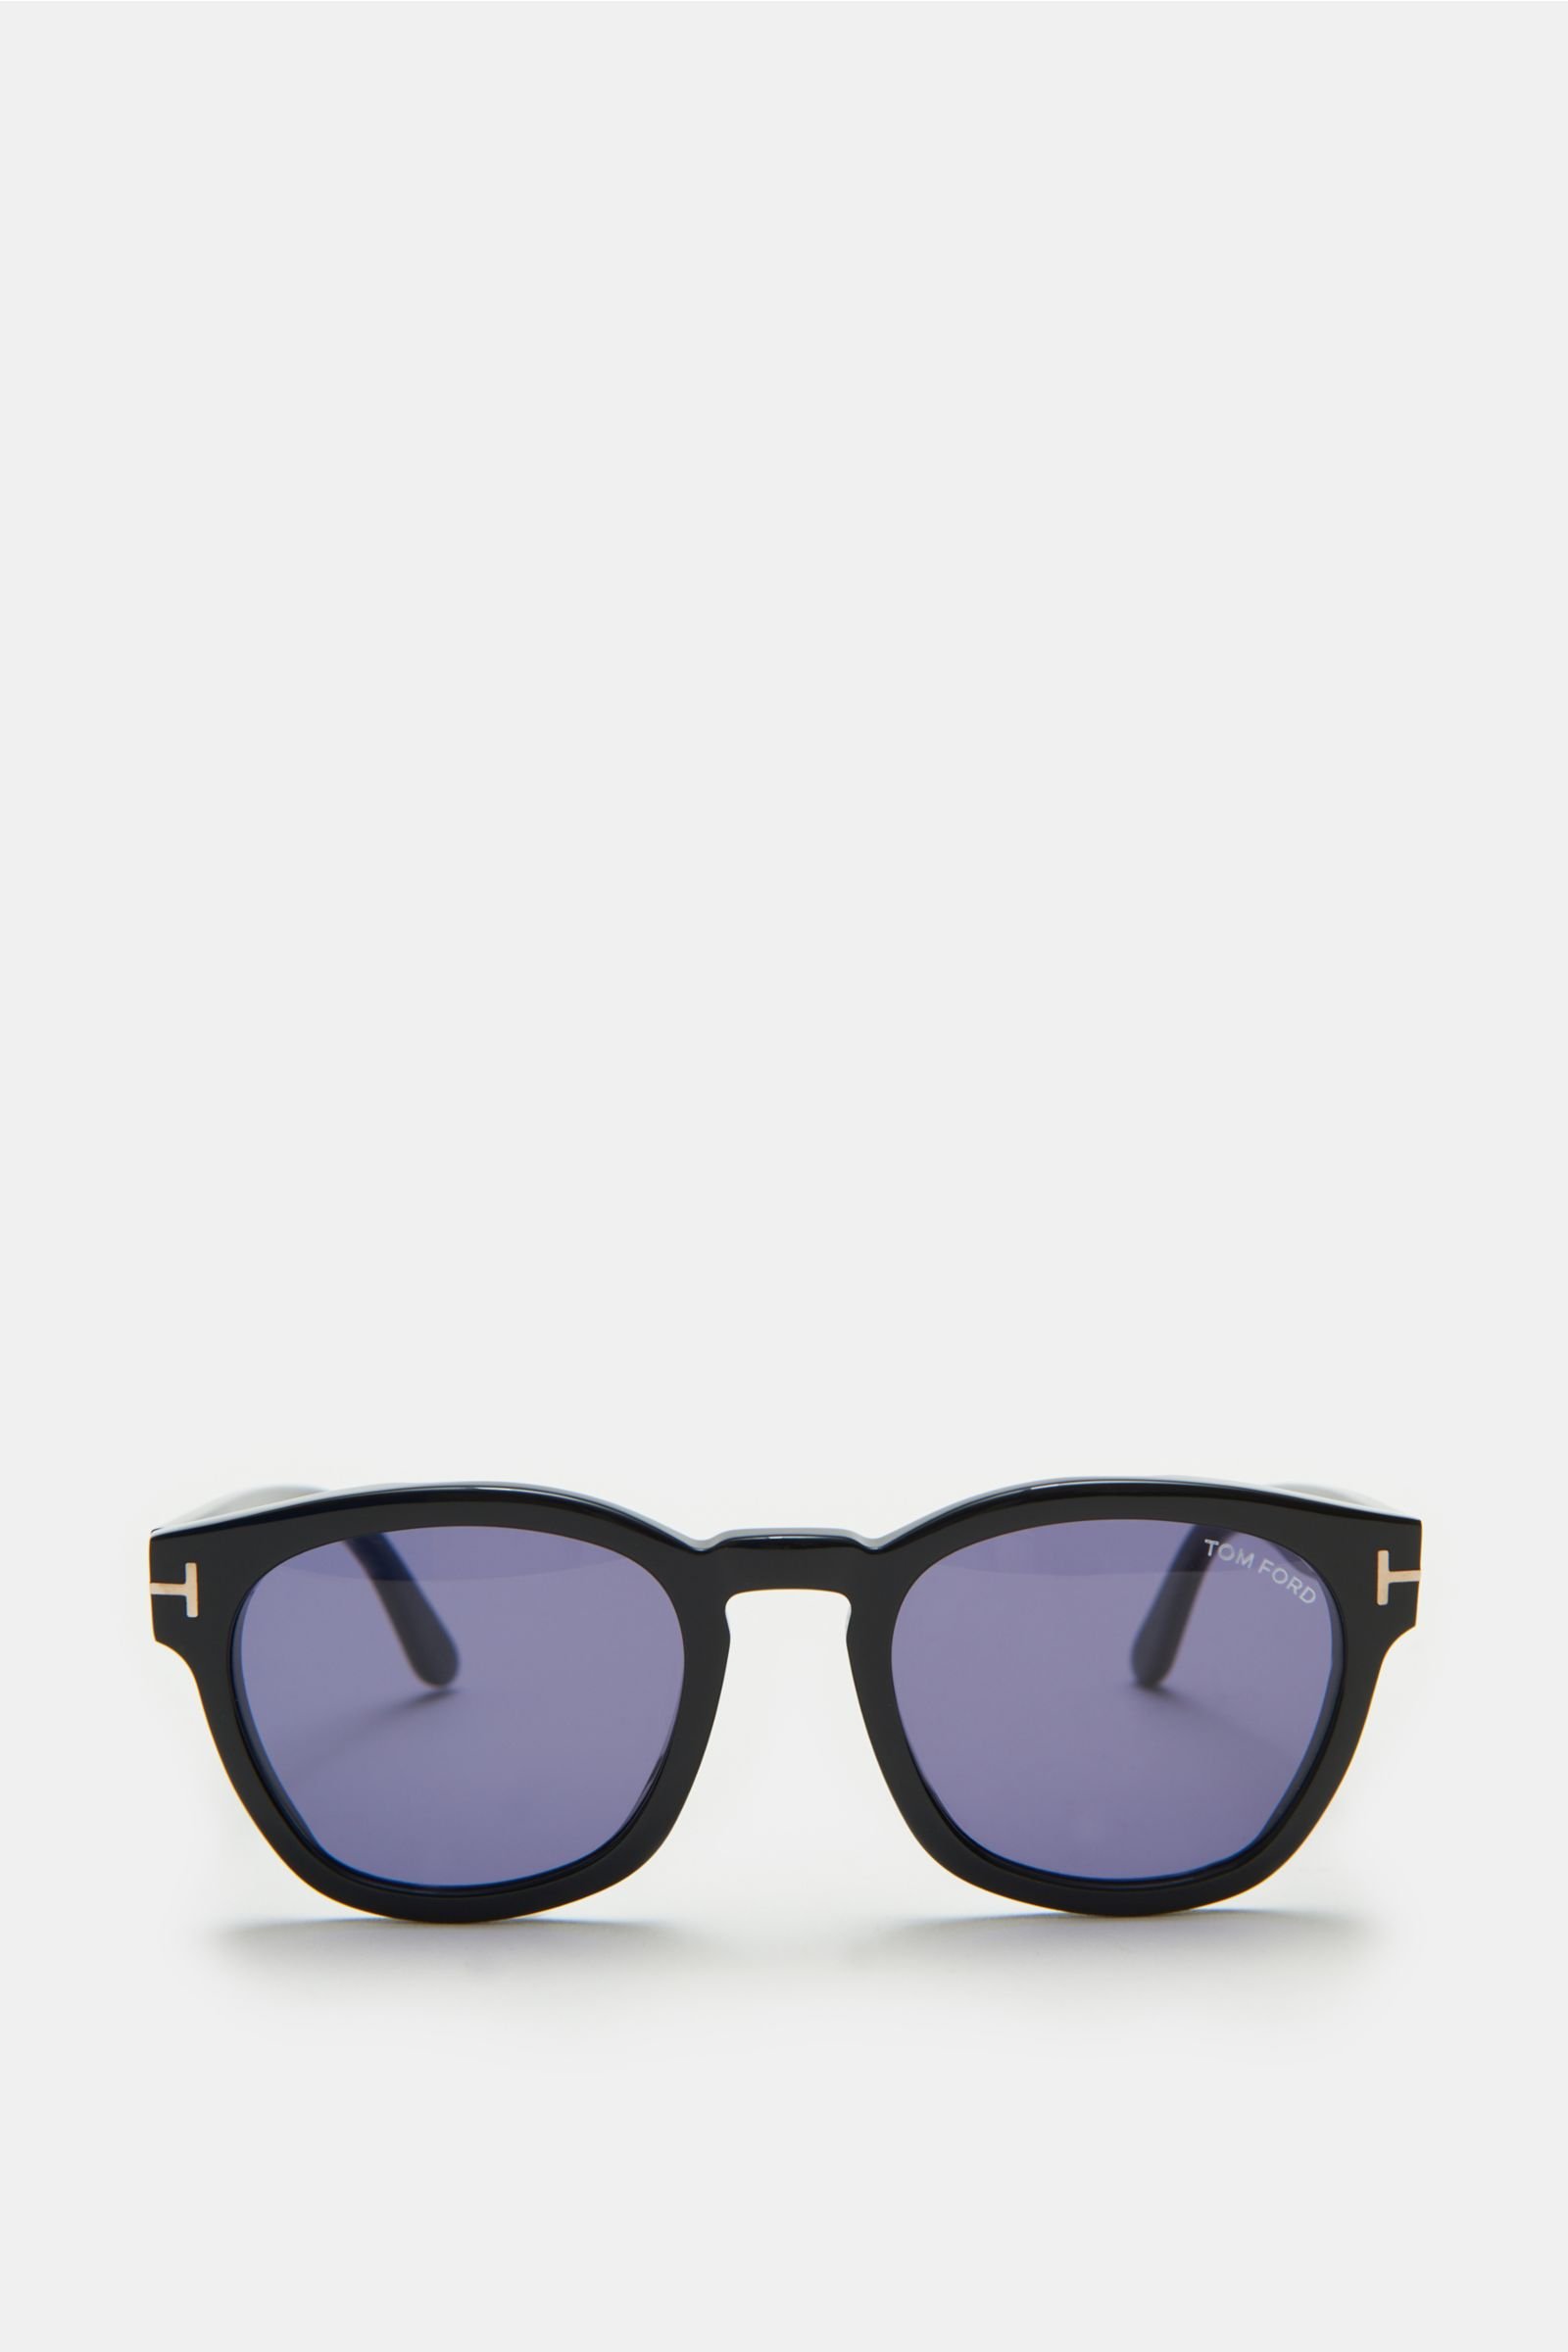 Sunglasses 'Bryan' black/blue